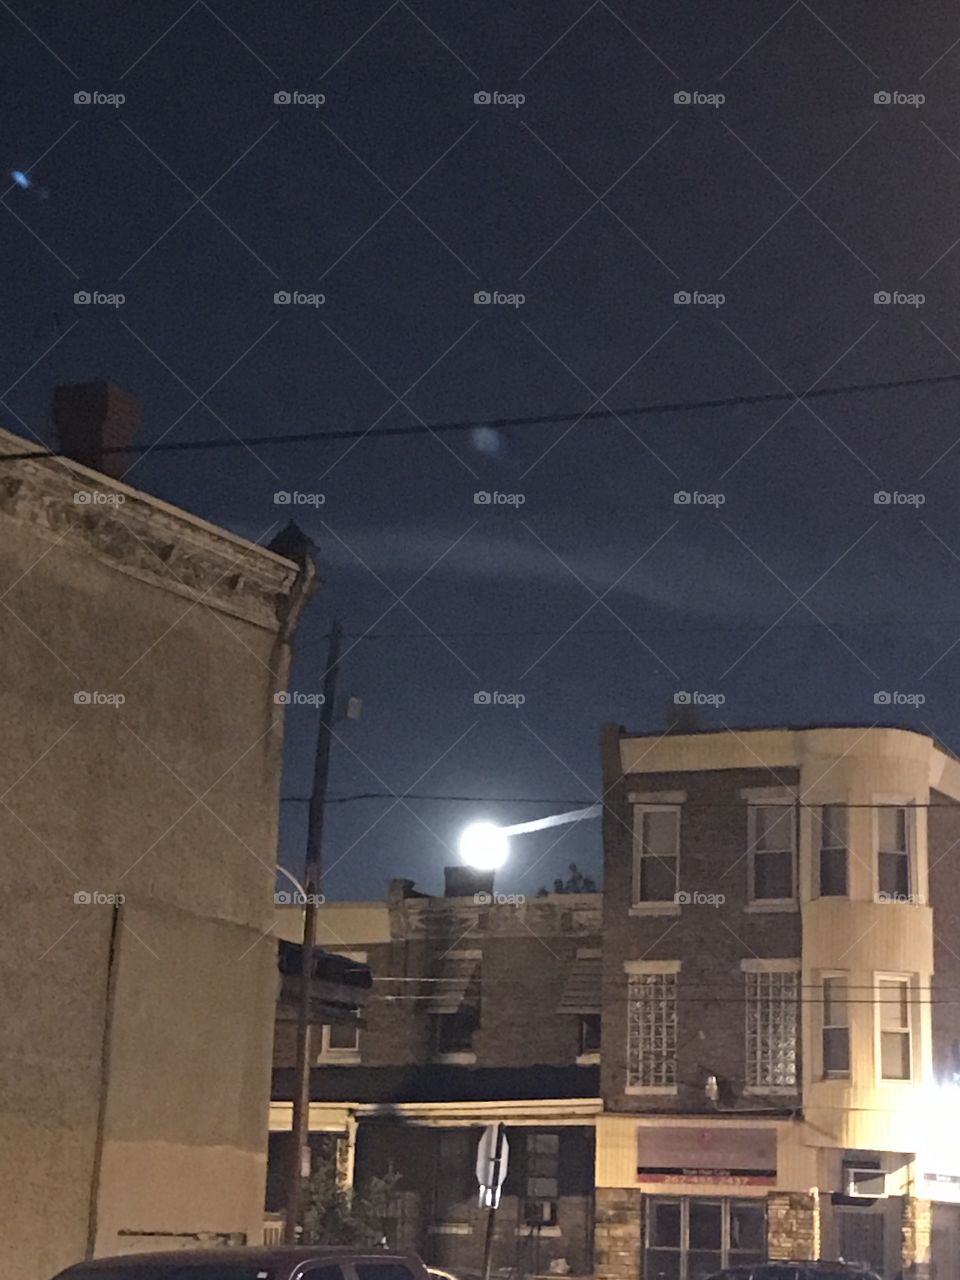 Urban Super Moon